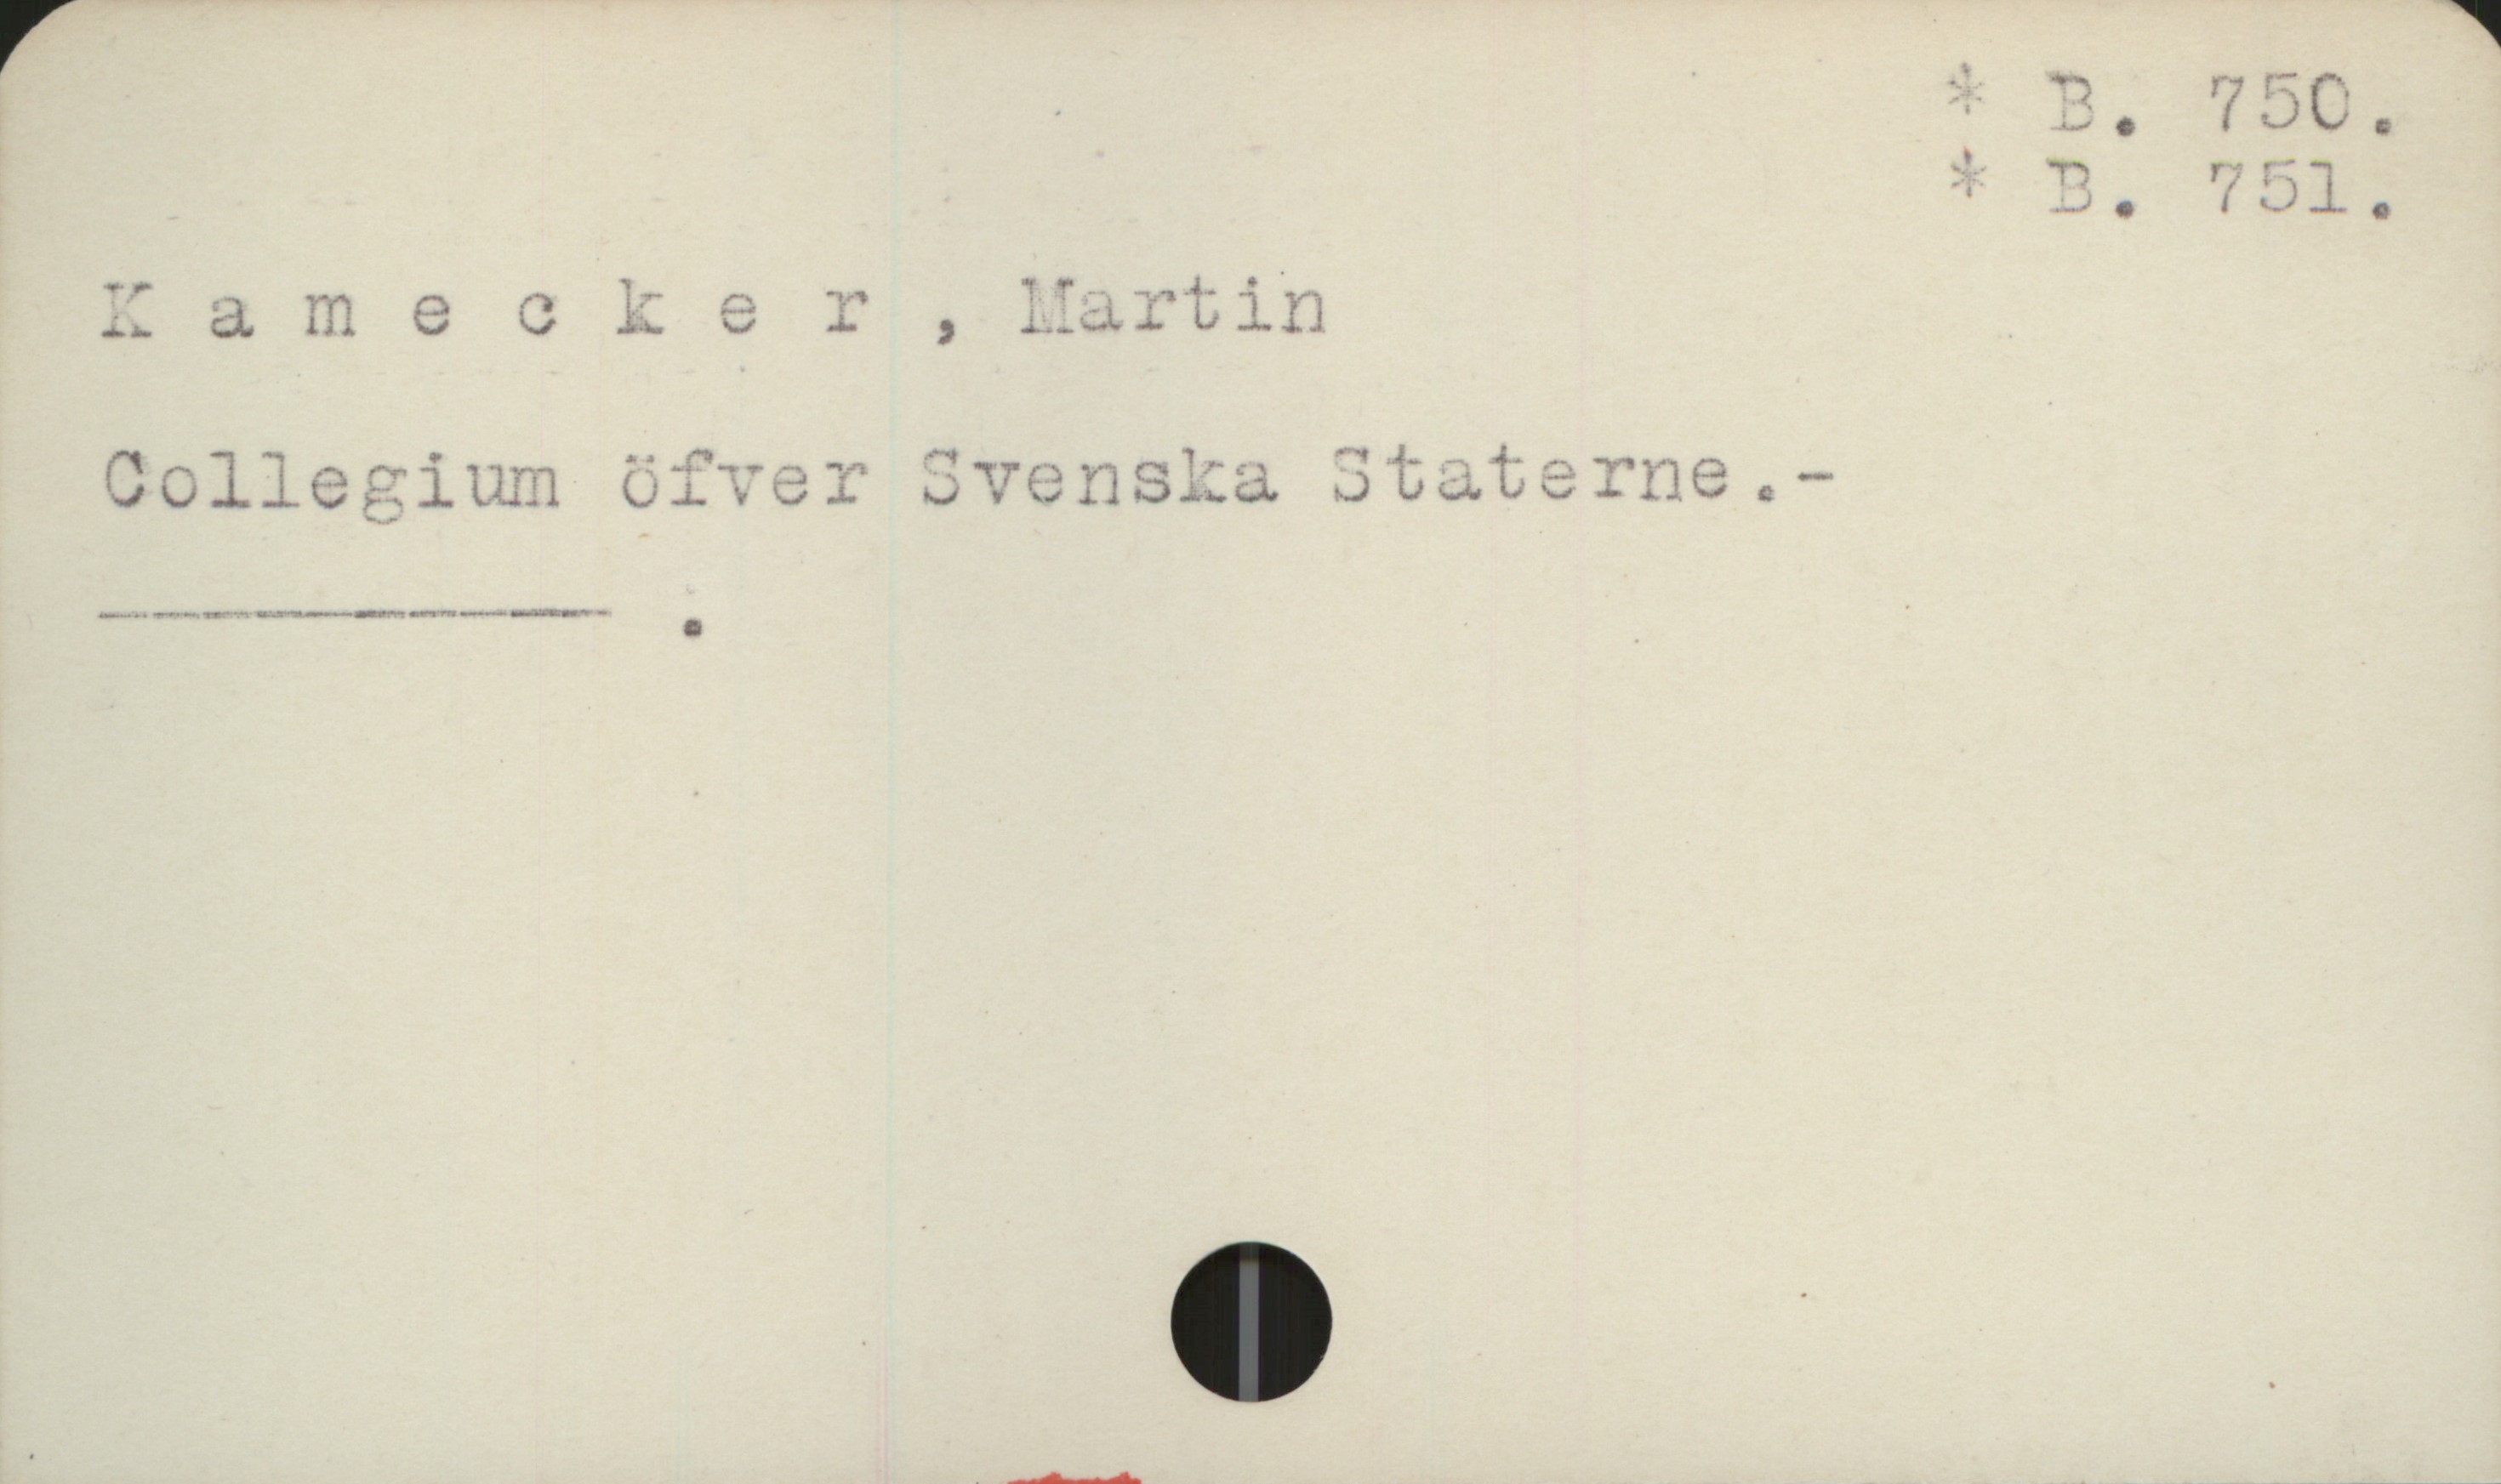  f. $ * n. 750,
- k :F B. 751.
Kamecker , Martin
Collegium öfver Svenska Staterne .-

